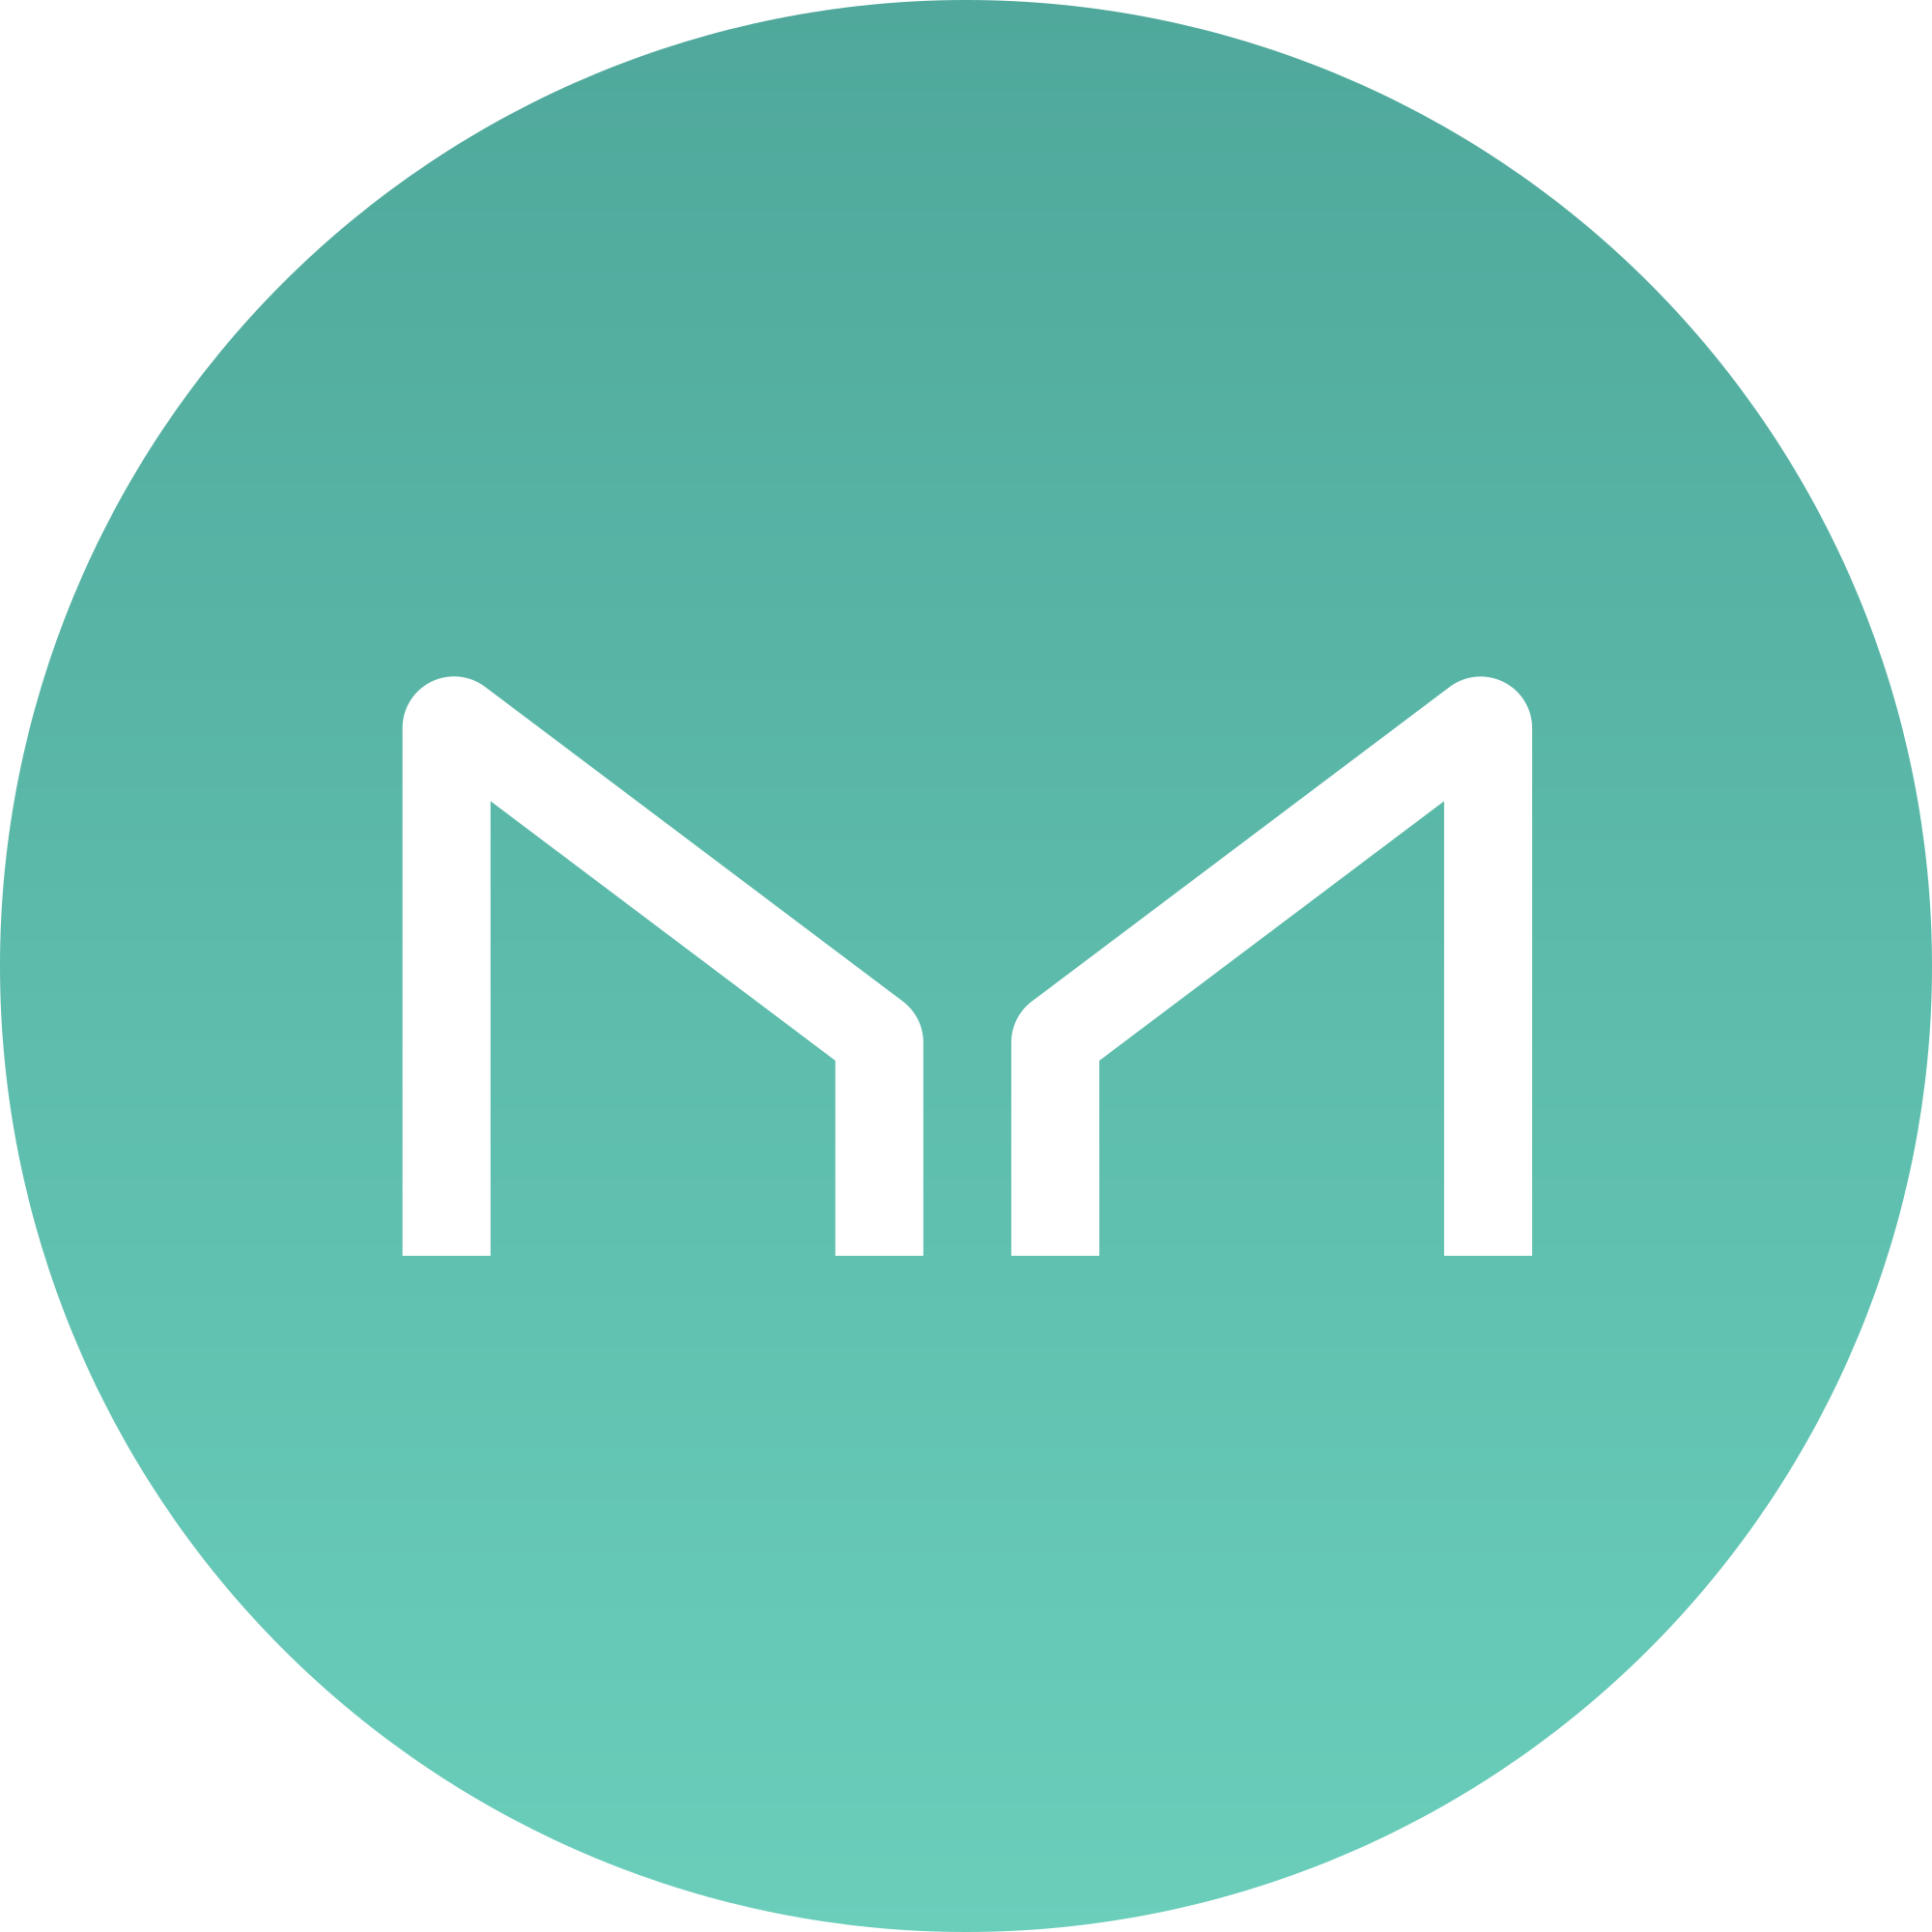 Maker Crypto Logo PNG Pic 